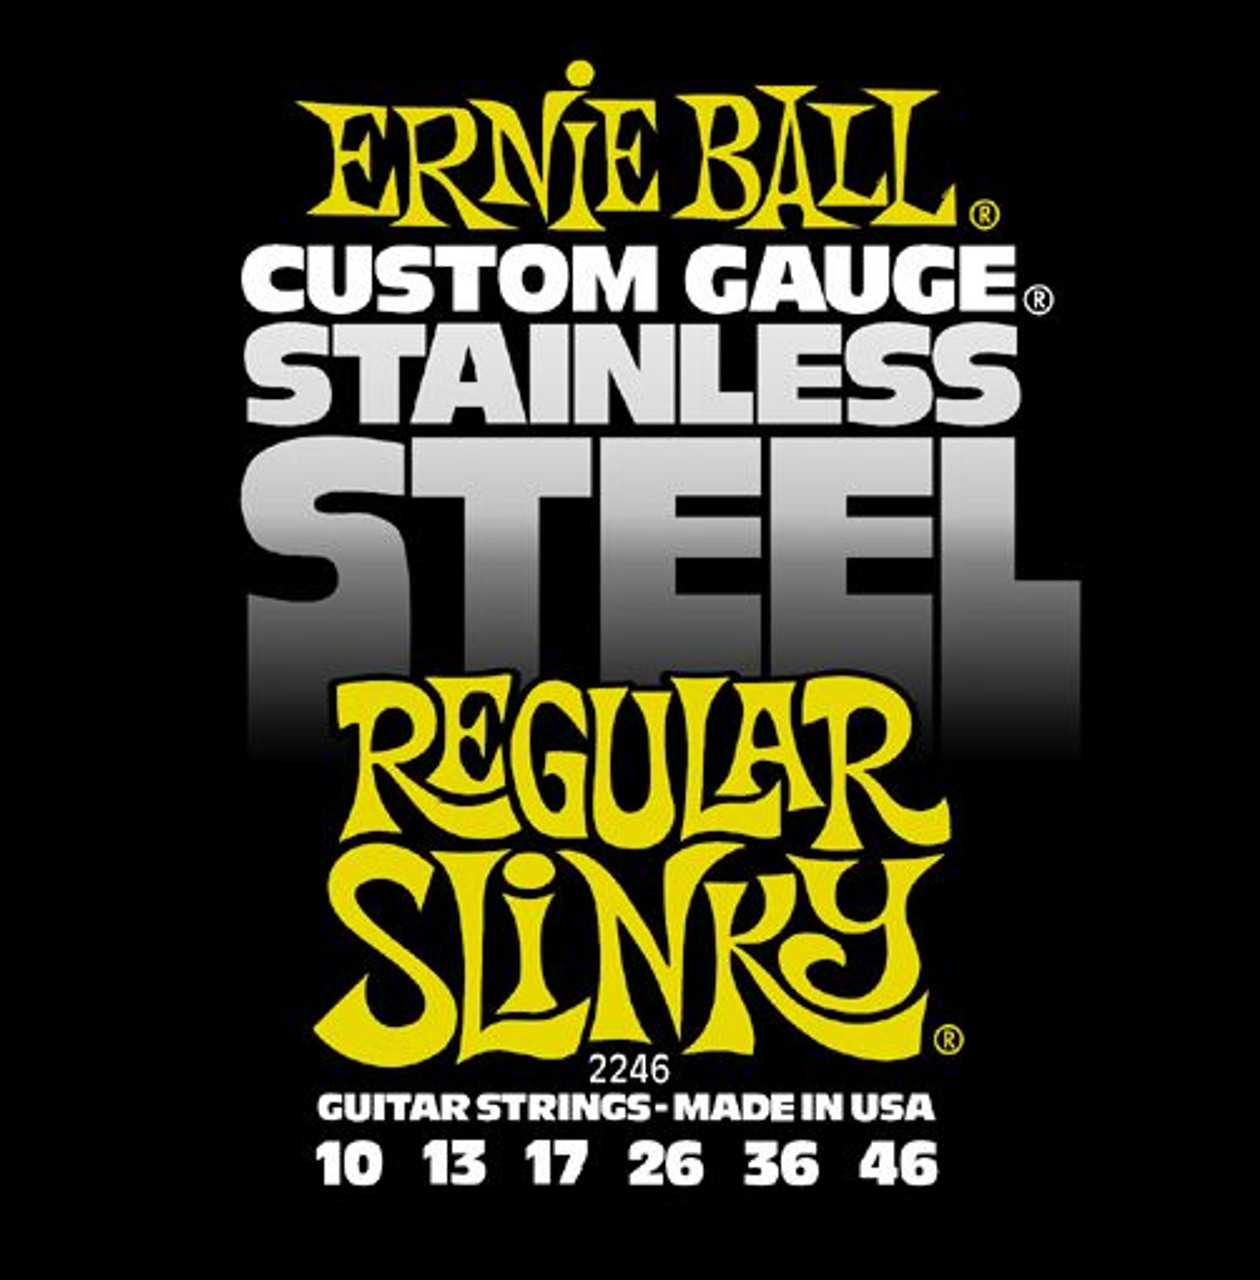 Ernie Ball Stainless Steel Electric Guitar Strings 2246 Regular Slinky 10-46